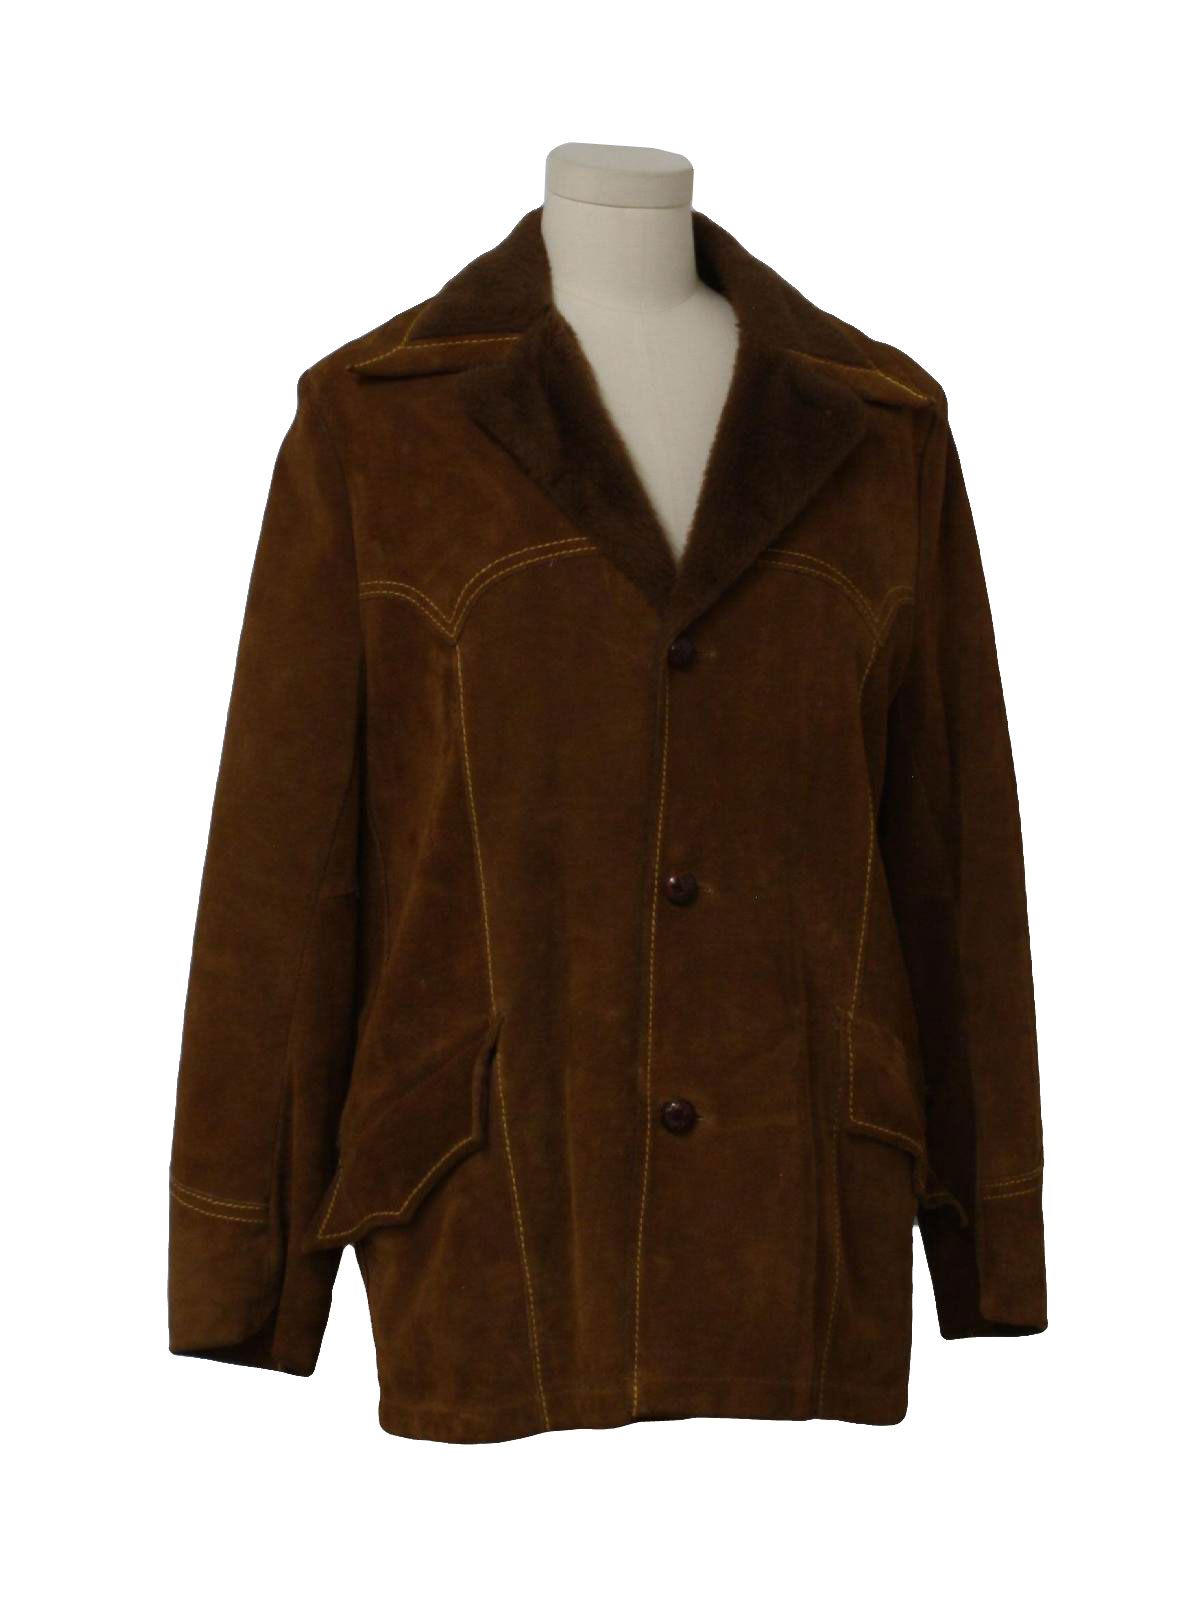 Retro 1970's Leather Jacket (Pioneer Wear) : 70s -Pioneer Wear- Mens